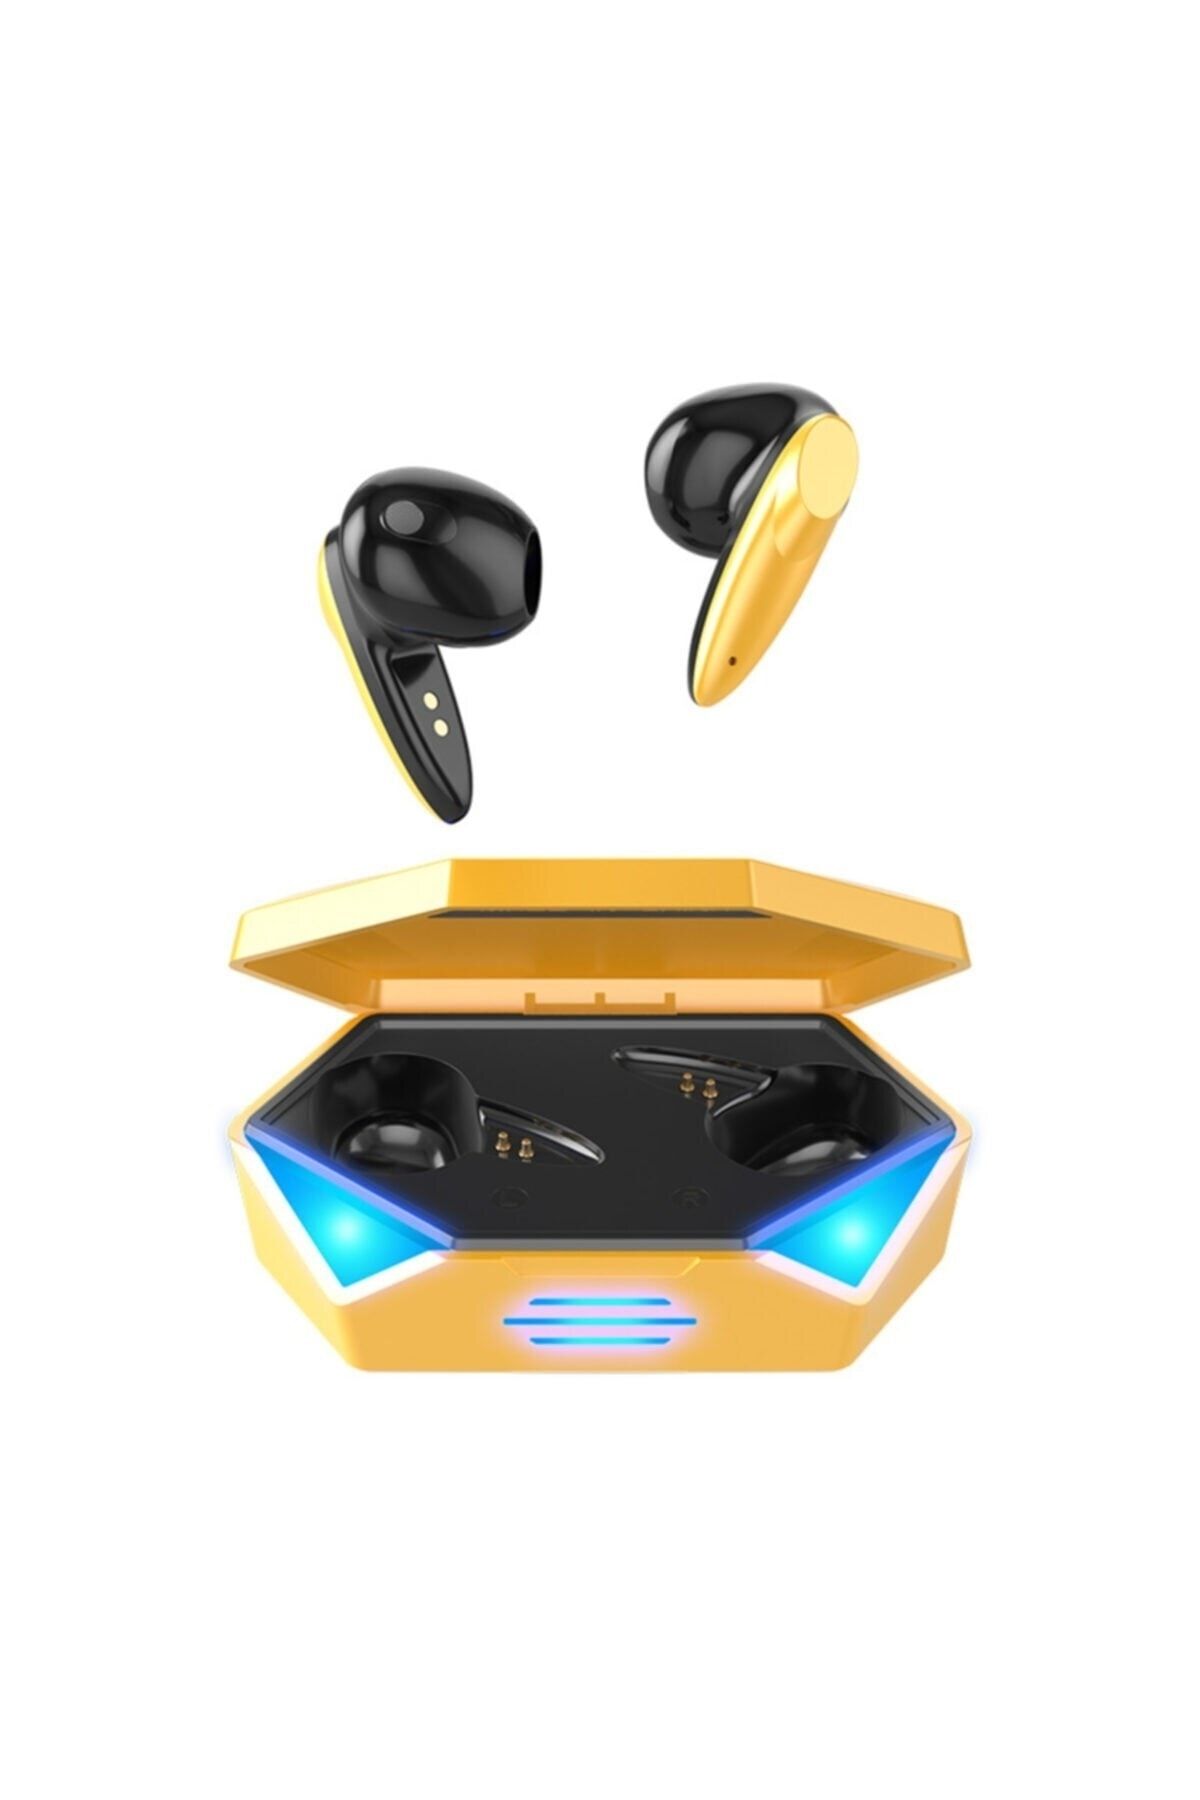 MOONSHOP Oyuncu Kulaklığı Kablosuz Kulakiçi Rgb Işıklı Çift Mikrofonlu 3 Modlu Bluetooth 5.2 Moon-g20